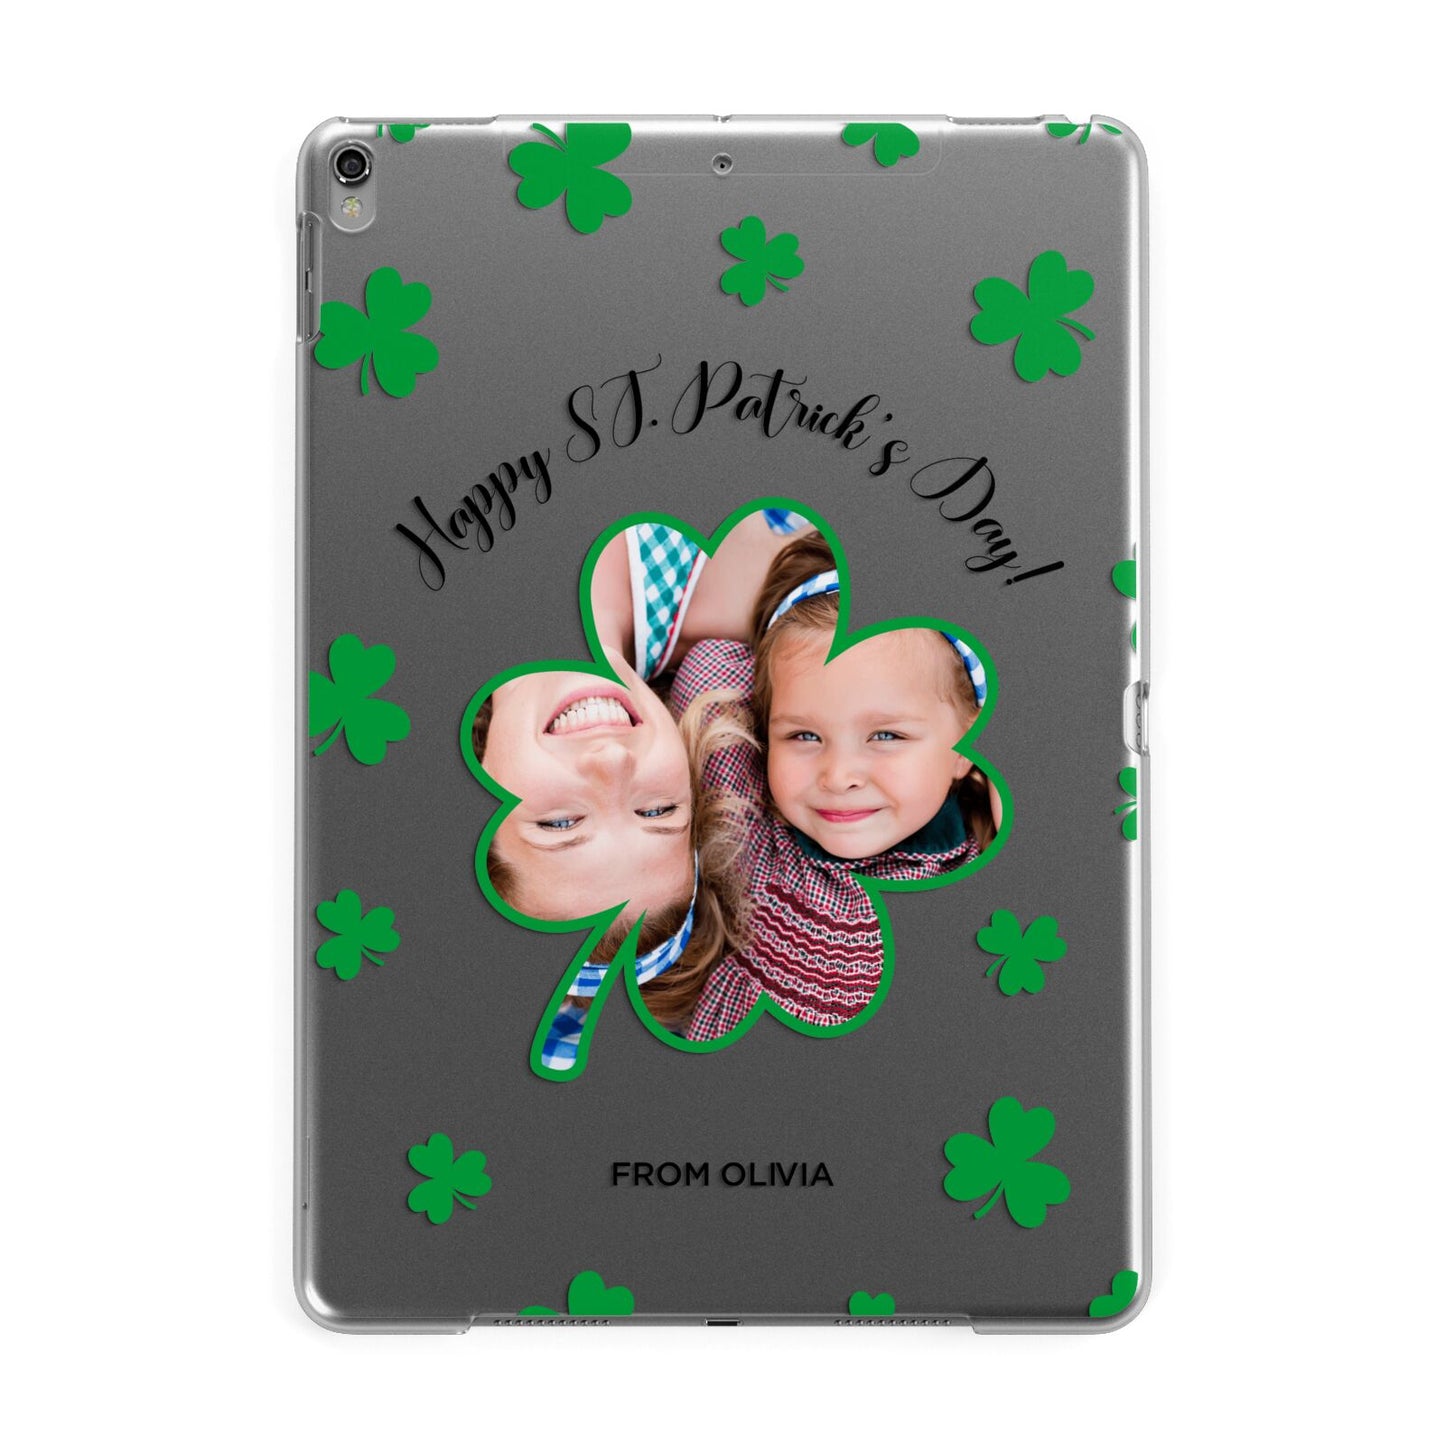 St Patricks Day Photo Upload Apple iPad Grey Case